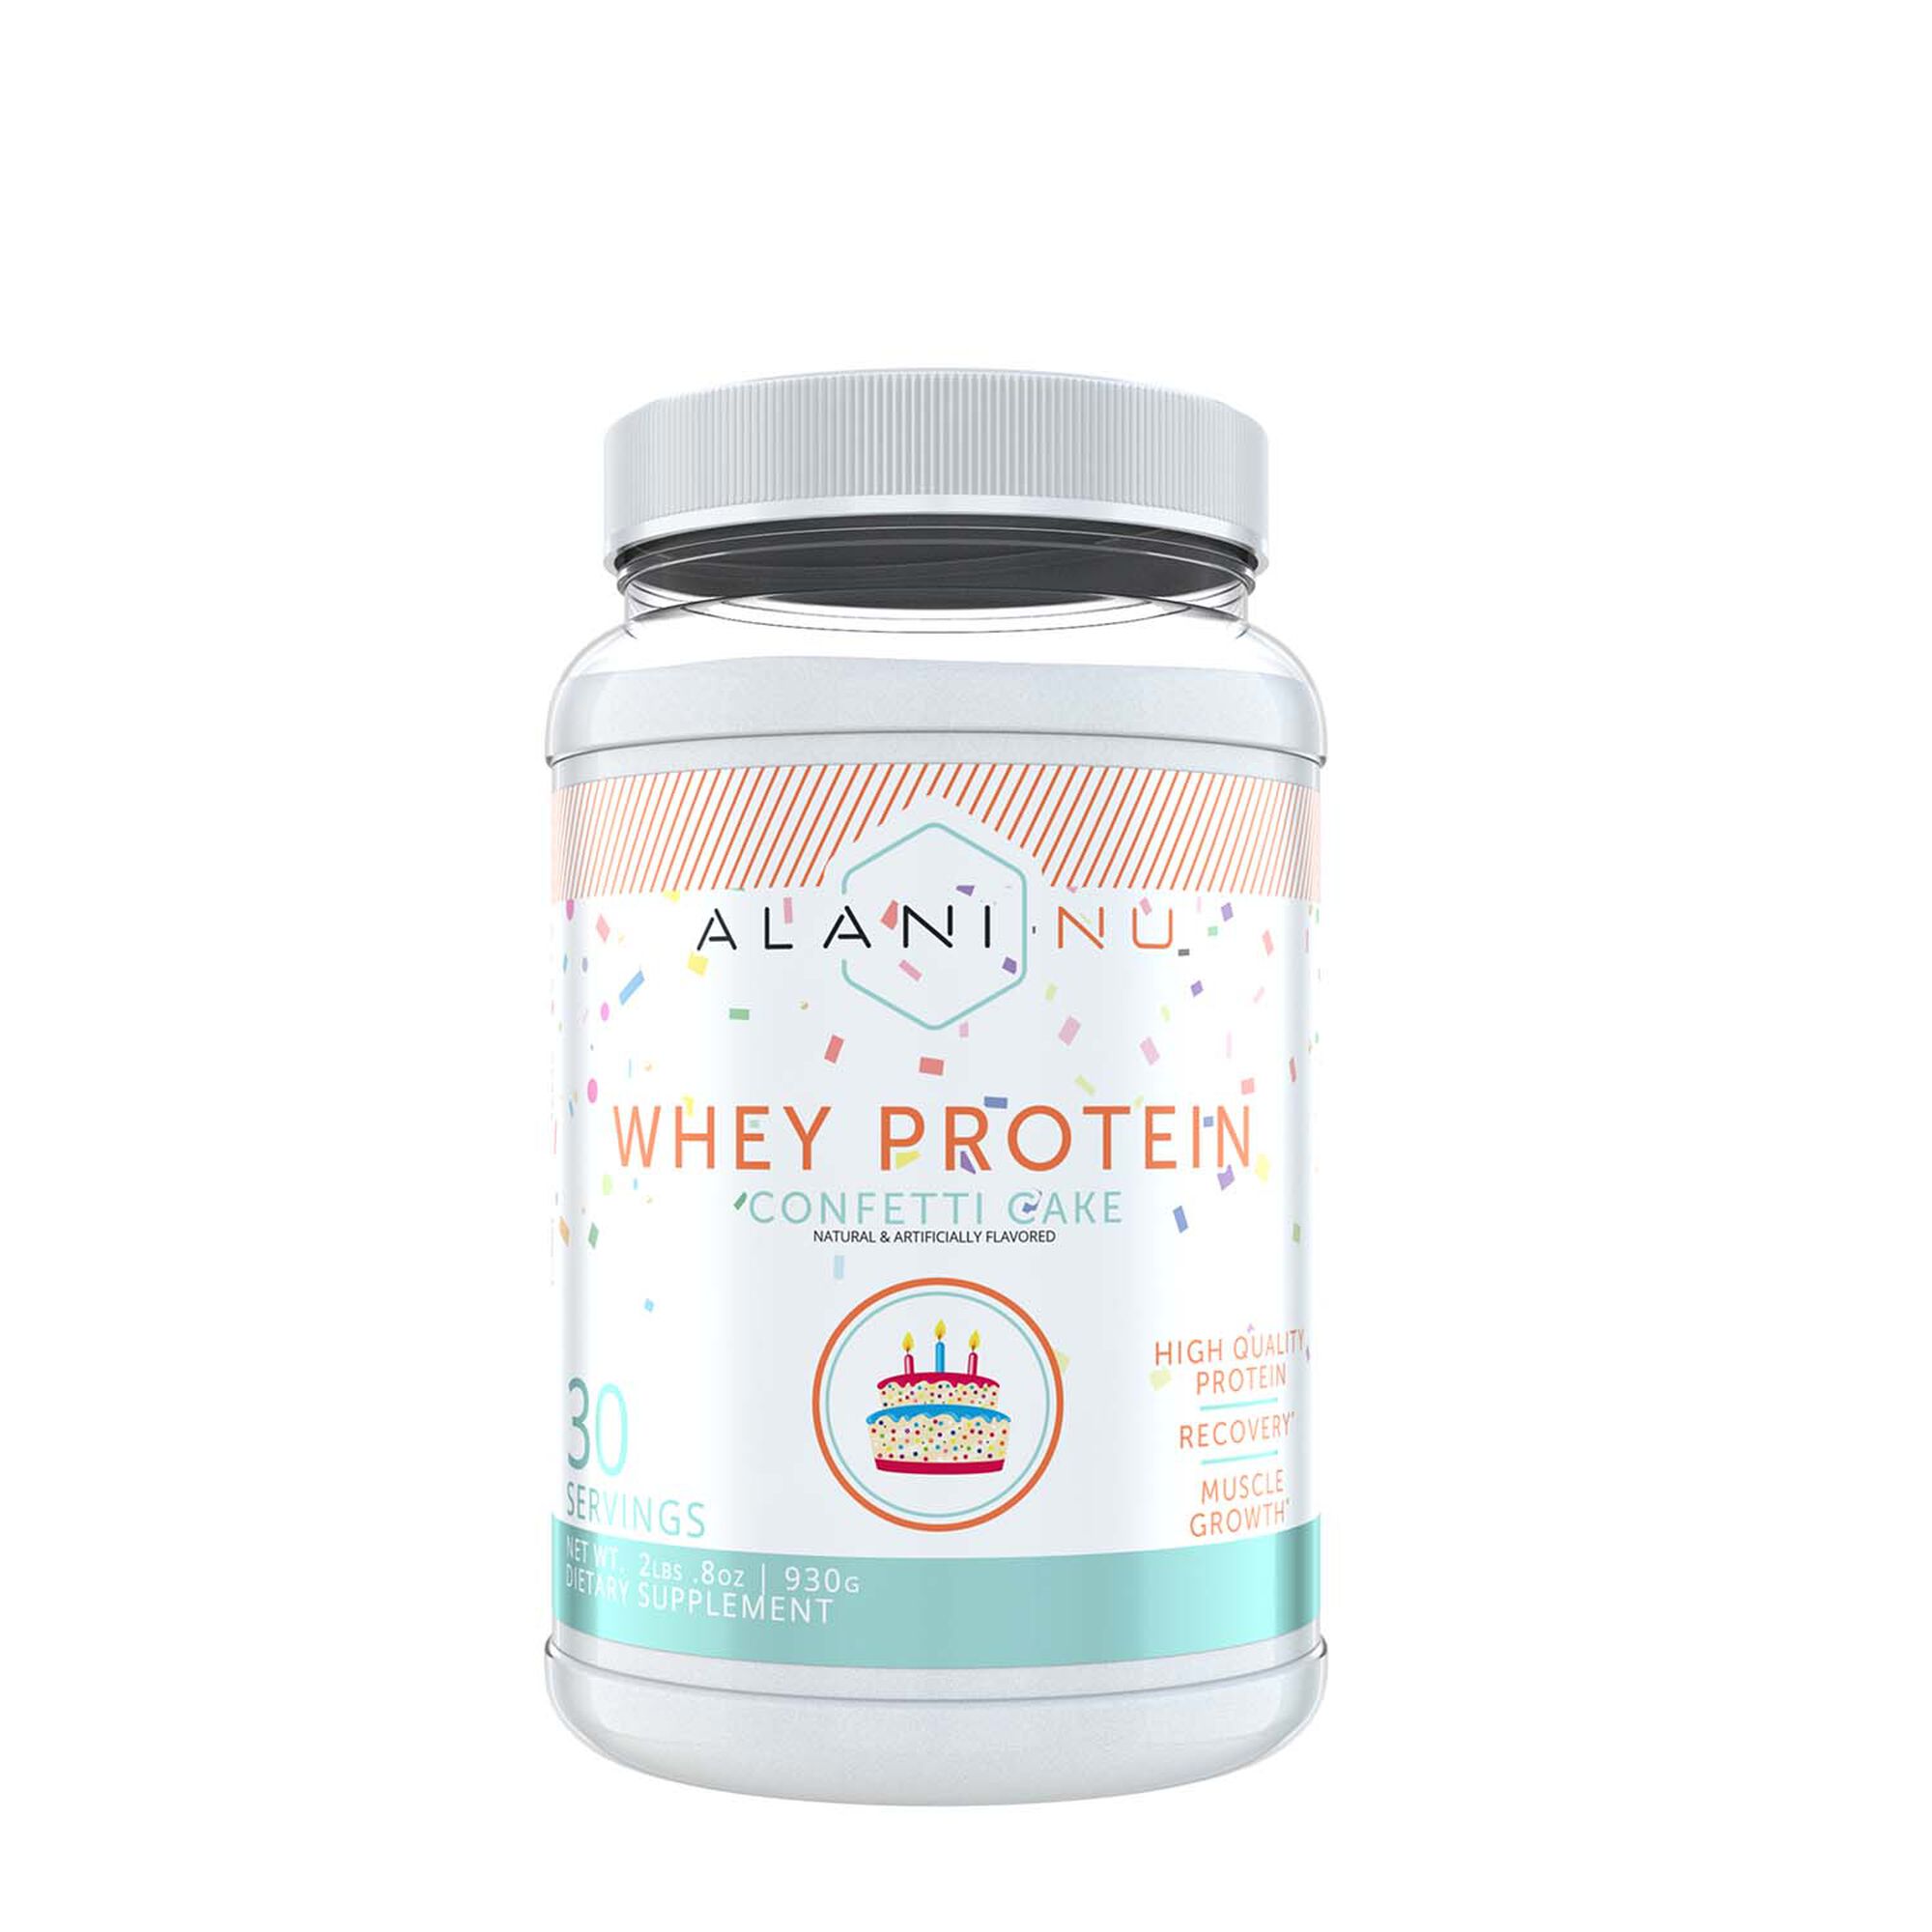 Alani Nu Whey Protein Powder Confetti Cake